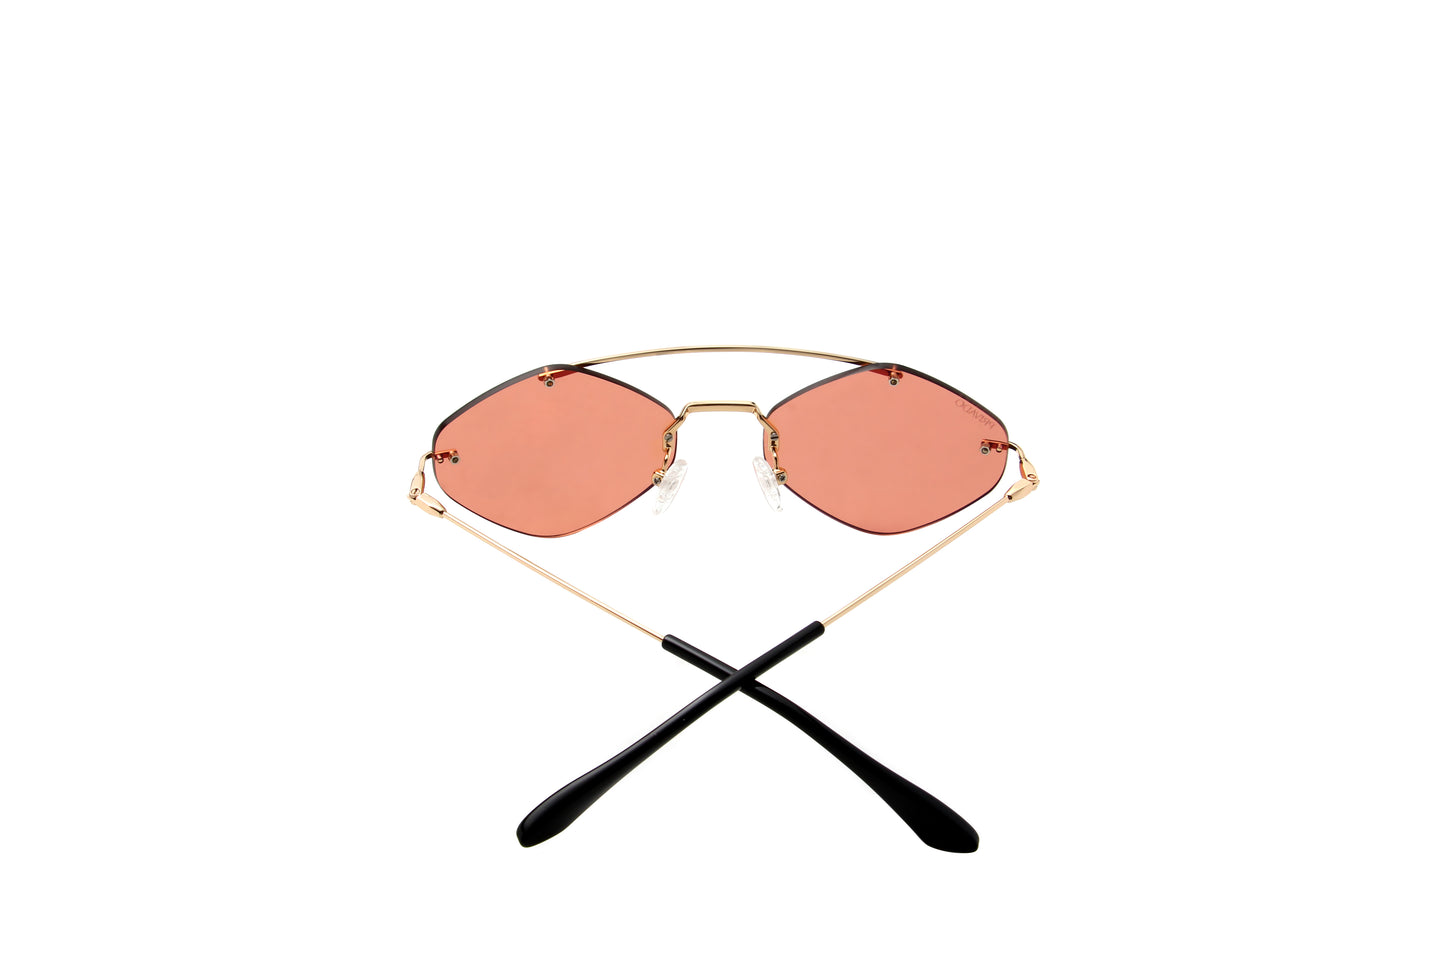 Privado Ninox gold sunglasses alternate view